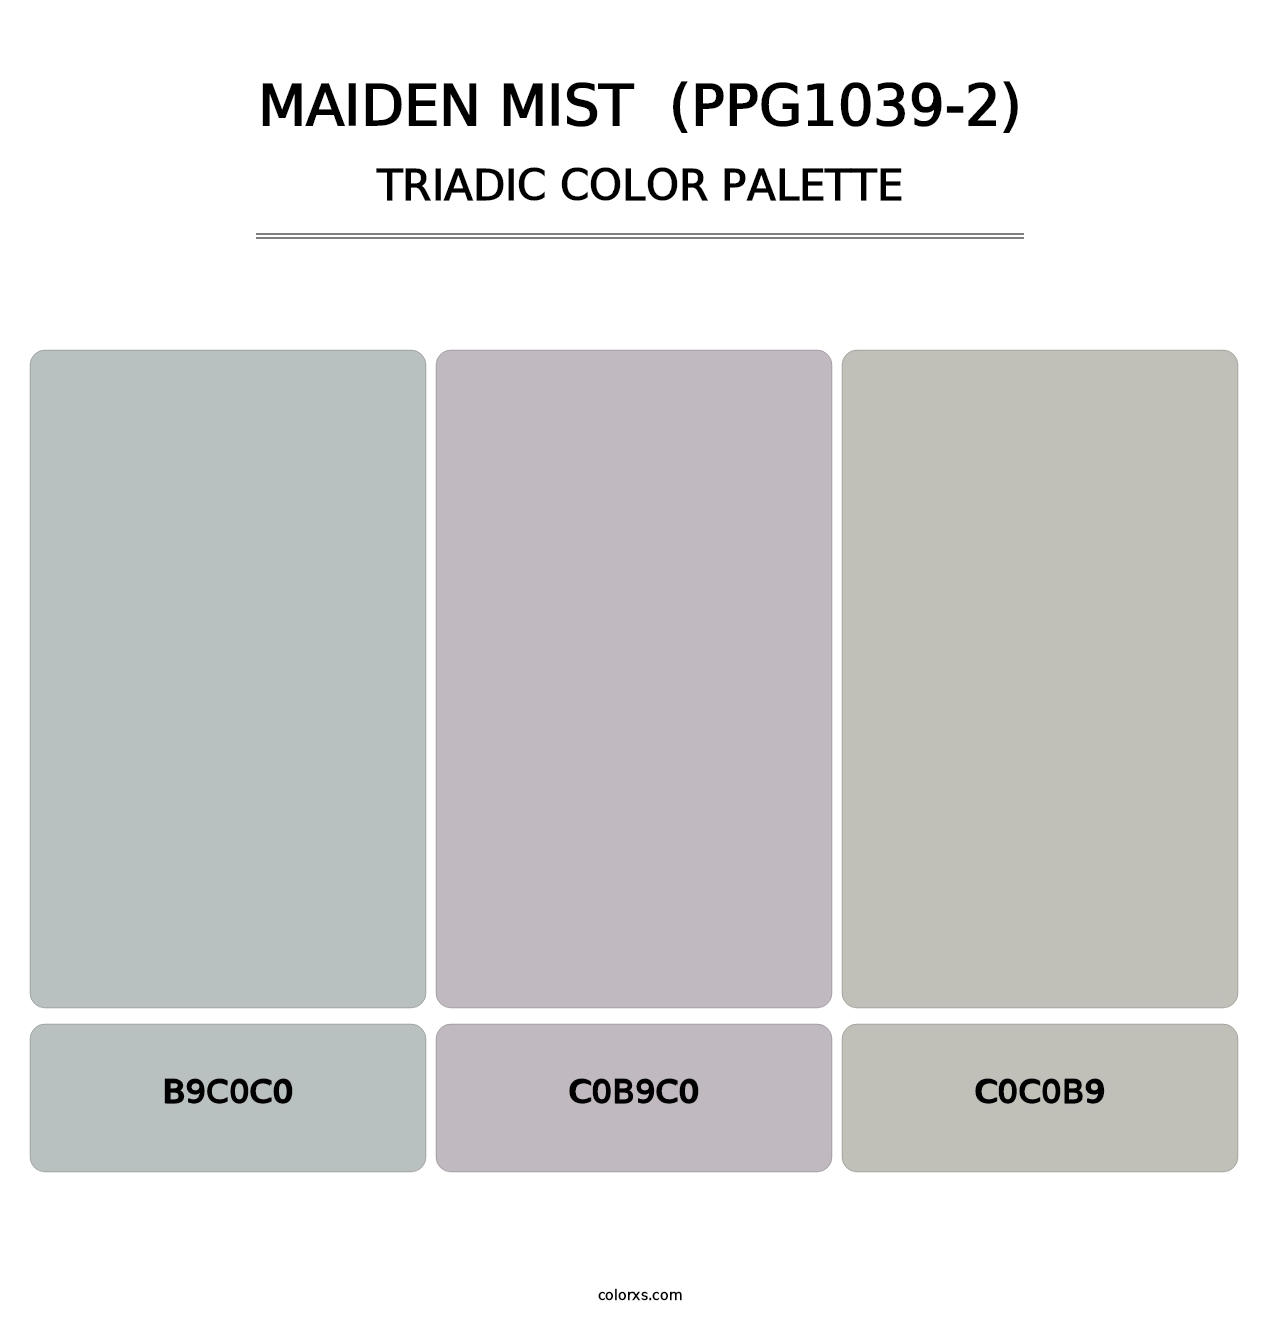 Maiden Mist  (PPG1039-2) - Triadic Color Palette